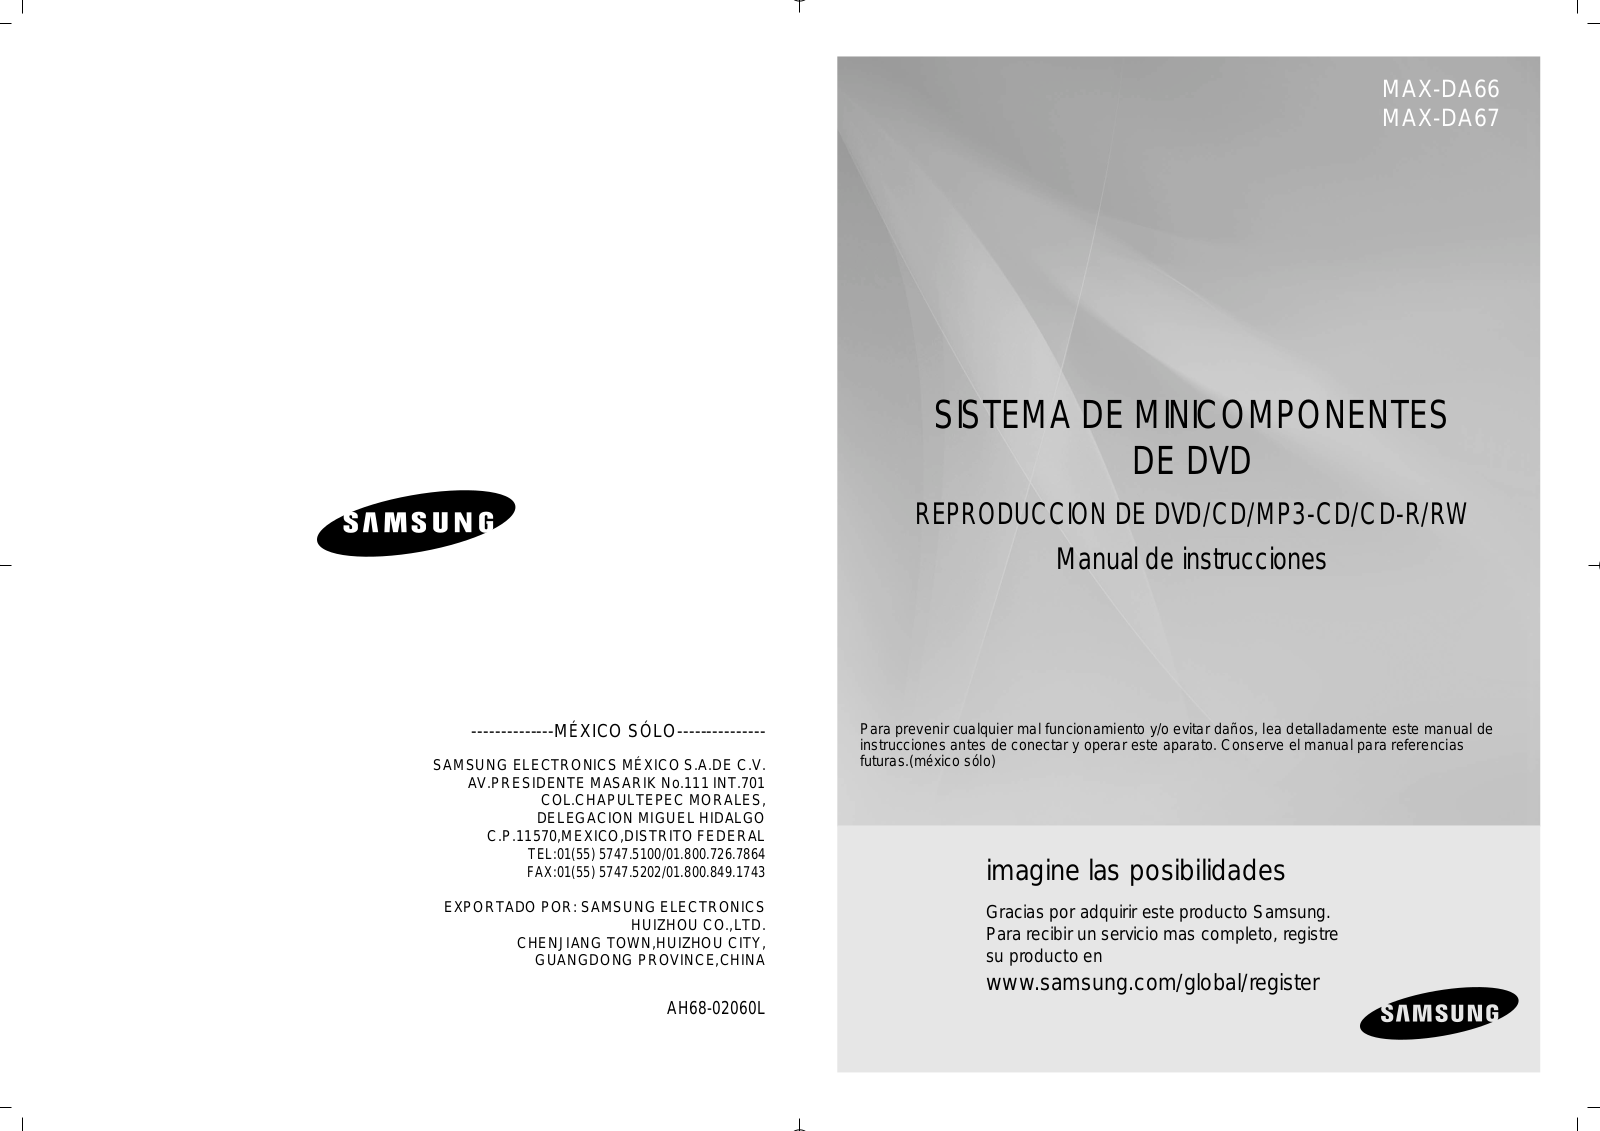 Samsung MAX-DA67, MAX-DA66, MAX-A66 Manual